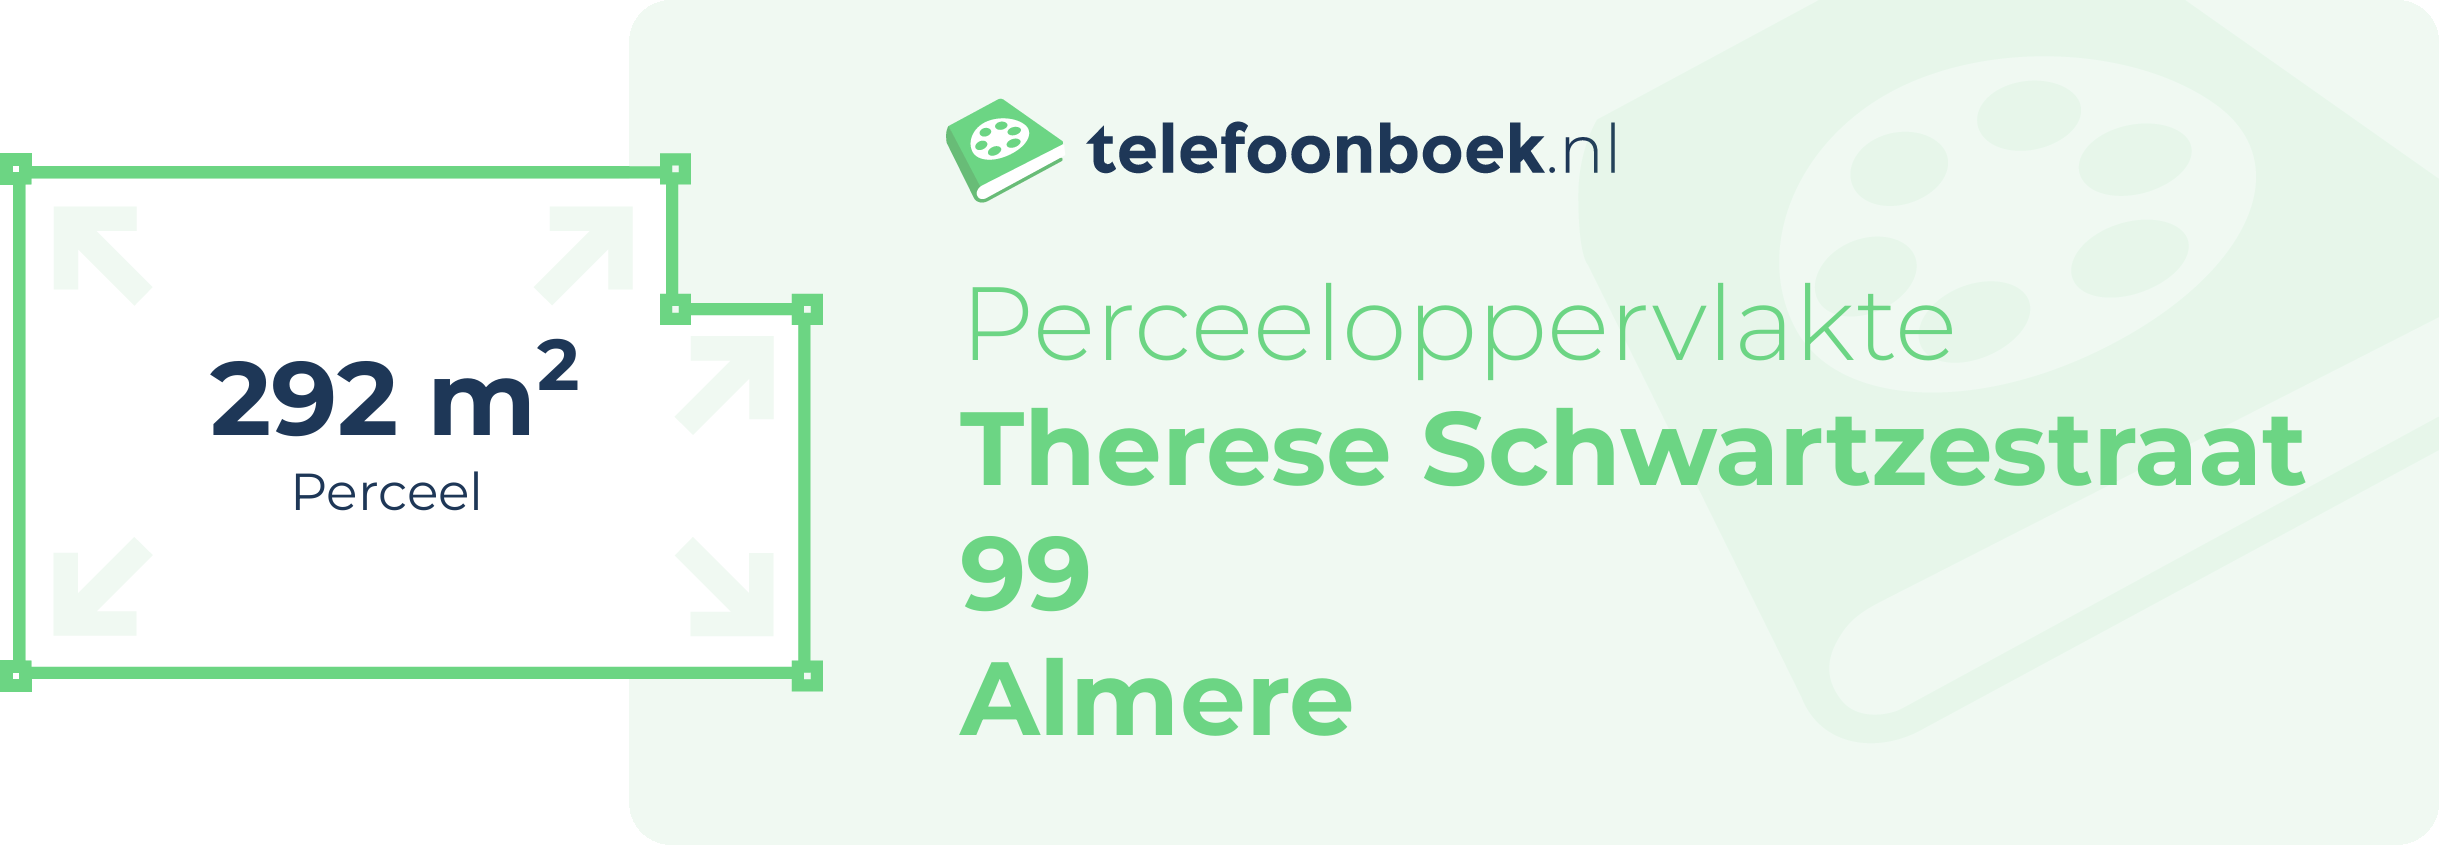 Perceeloppervlakte Therese Schwartzestraat 99 Almere